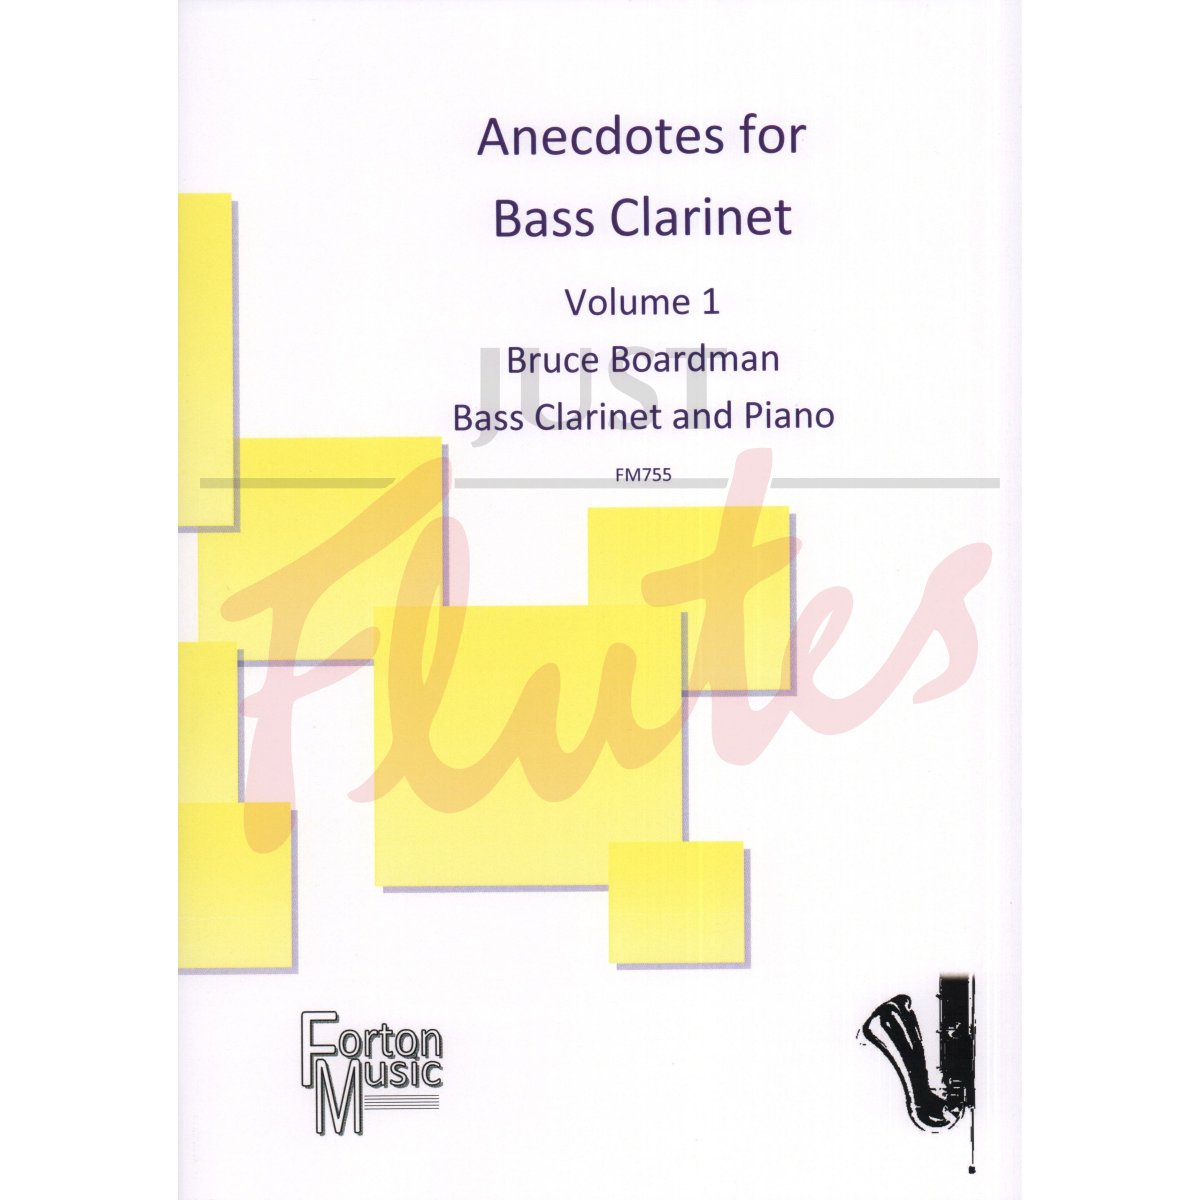 Anecdotes for Bass Clarinet Vol. 1